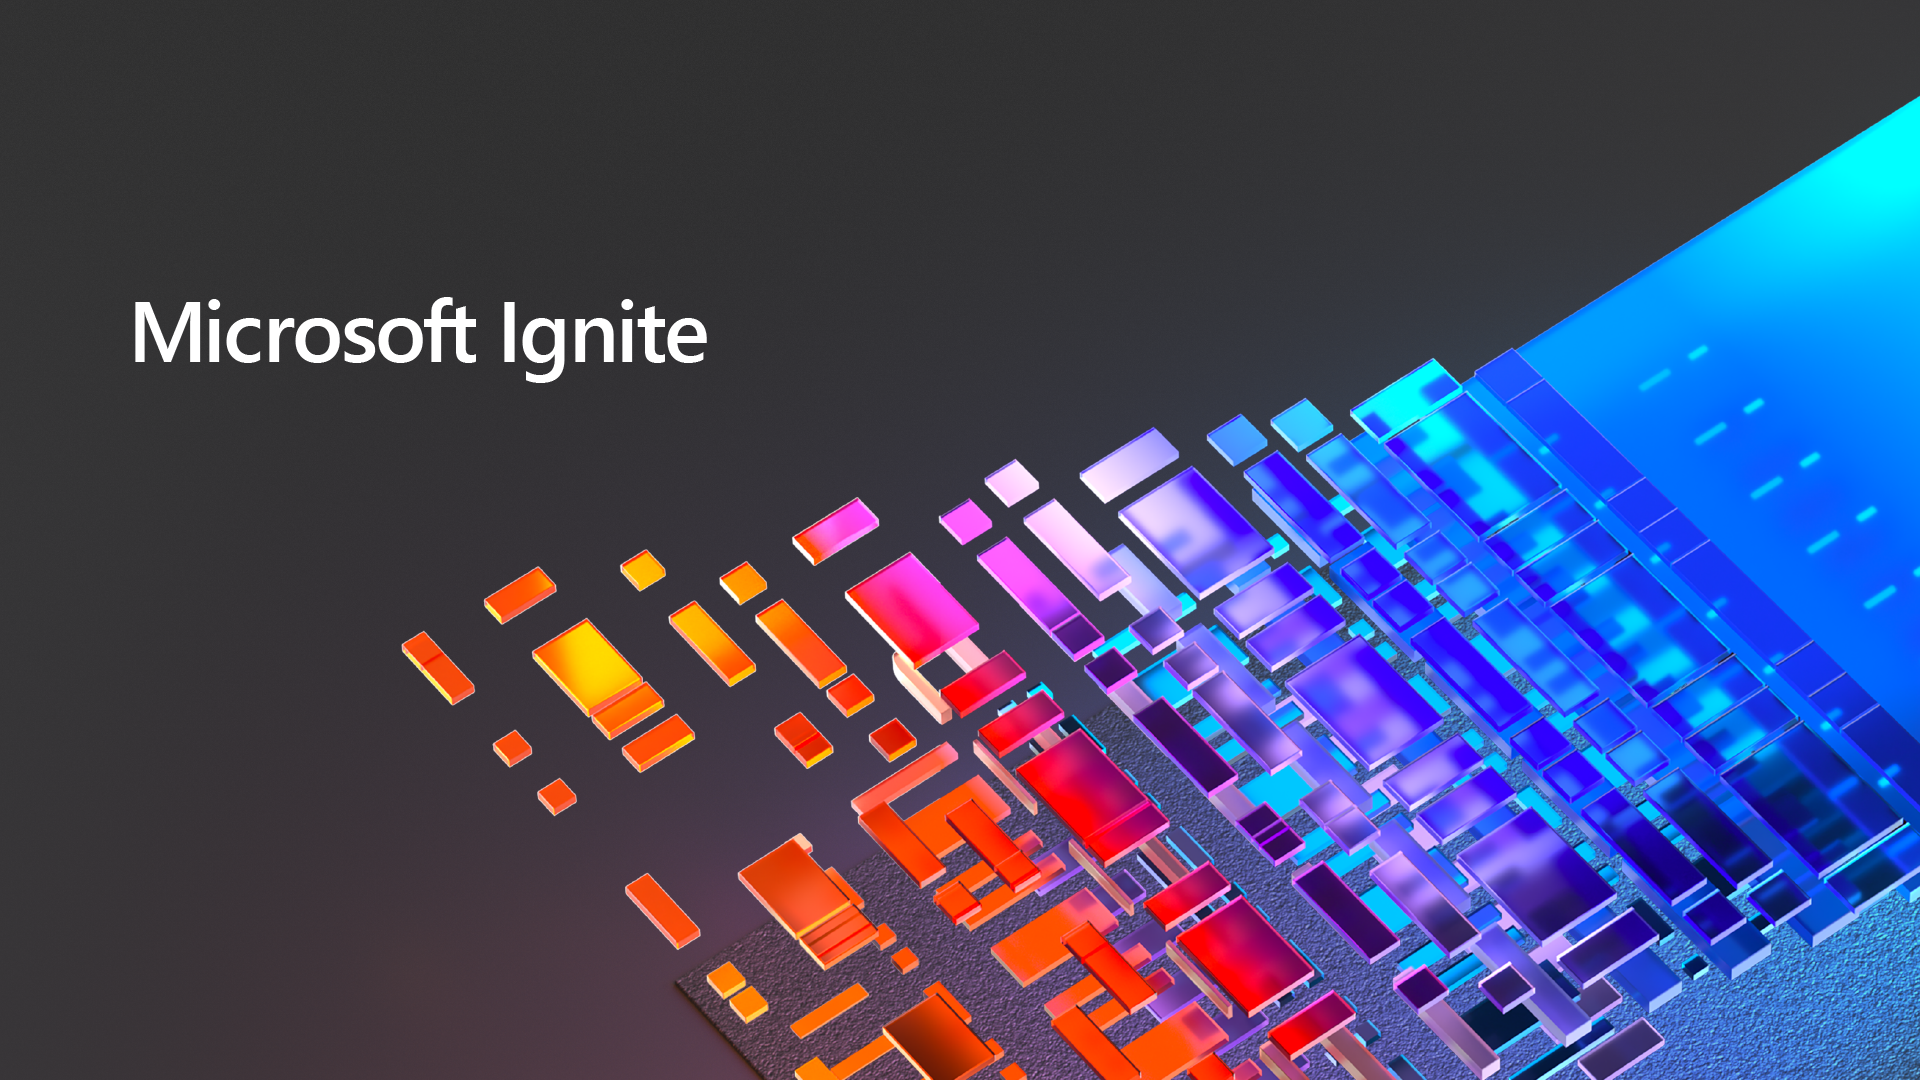 Microsoft Ignite event logo